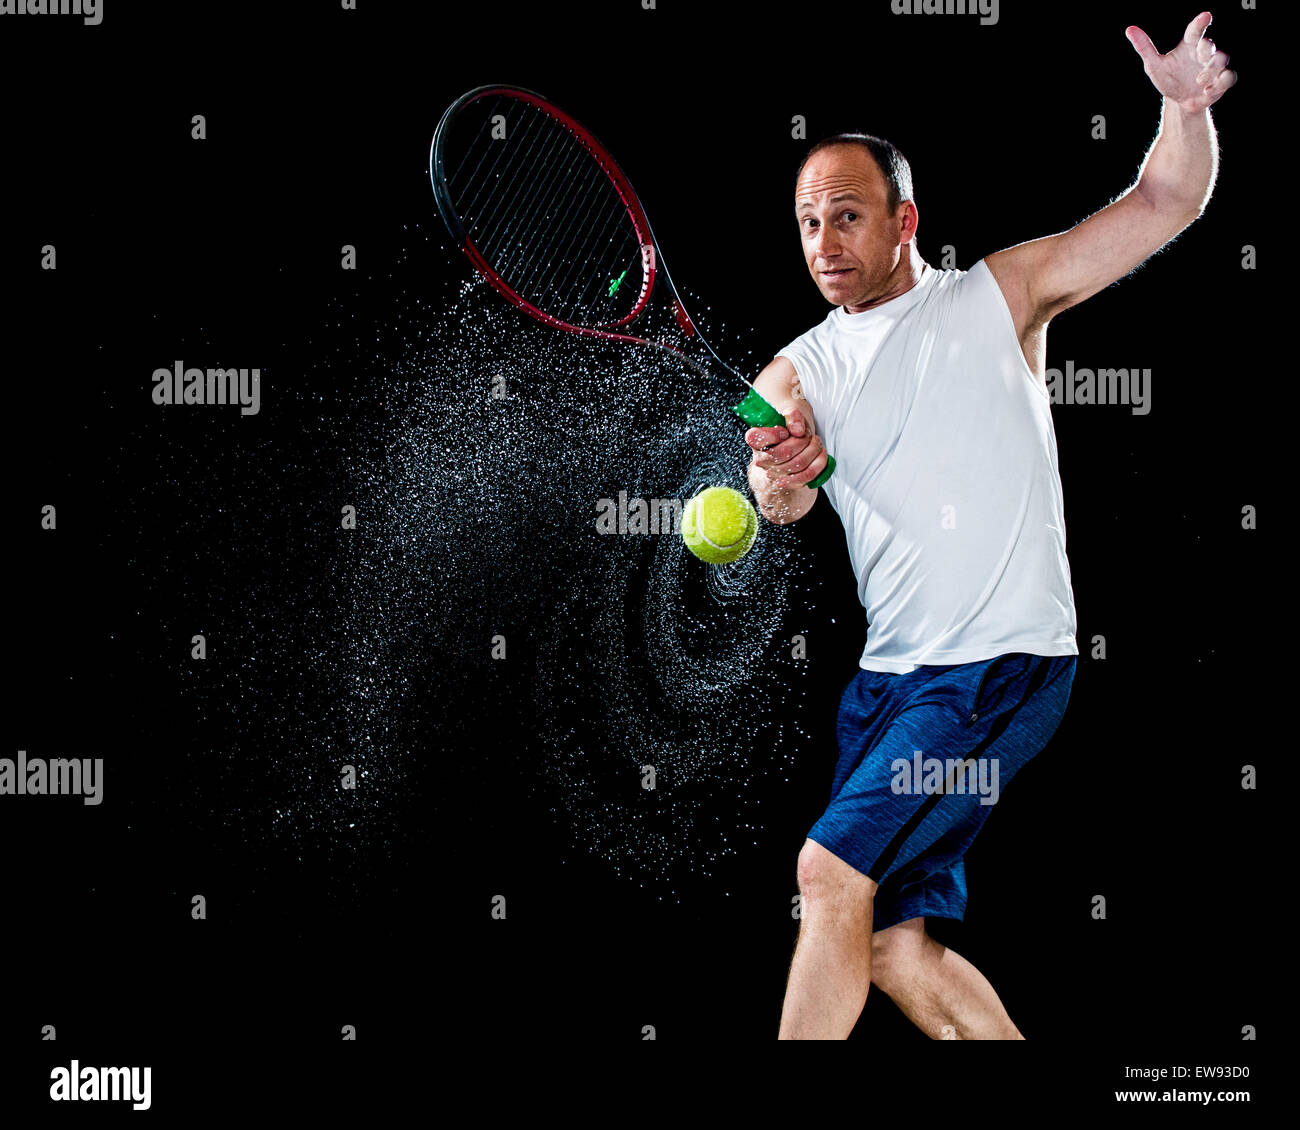 Tennis action shot. Forehand. Studio shot over black. Stock Photo